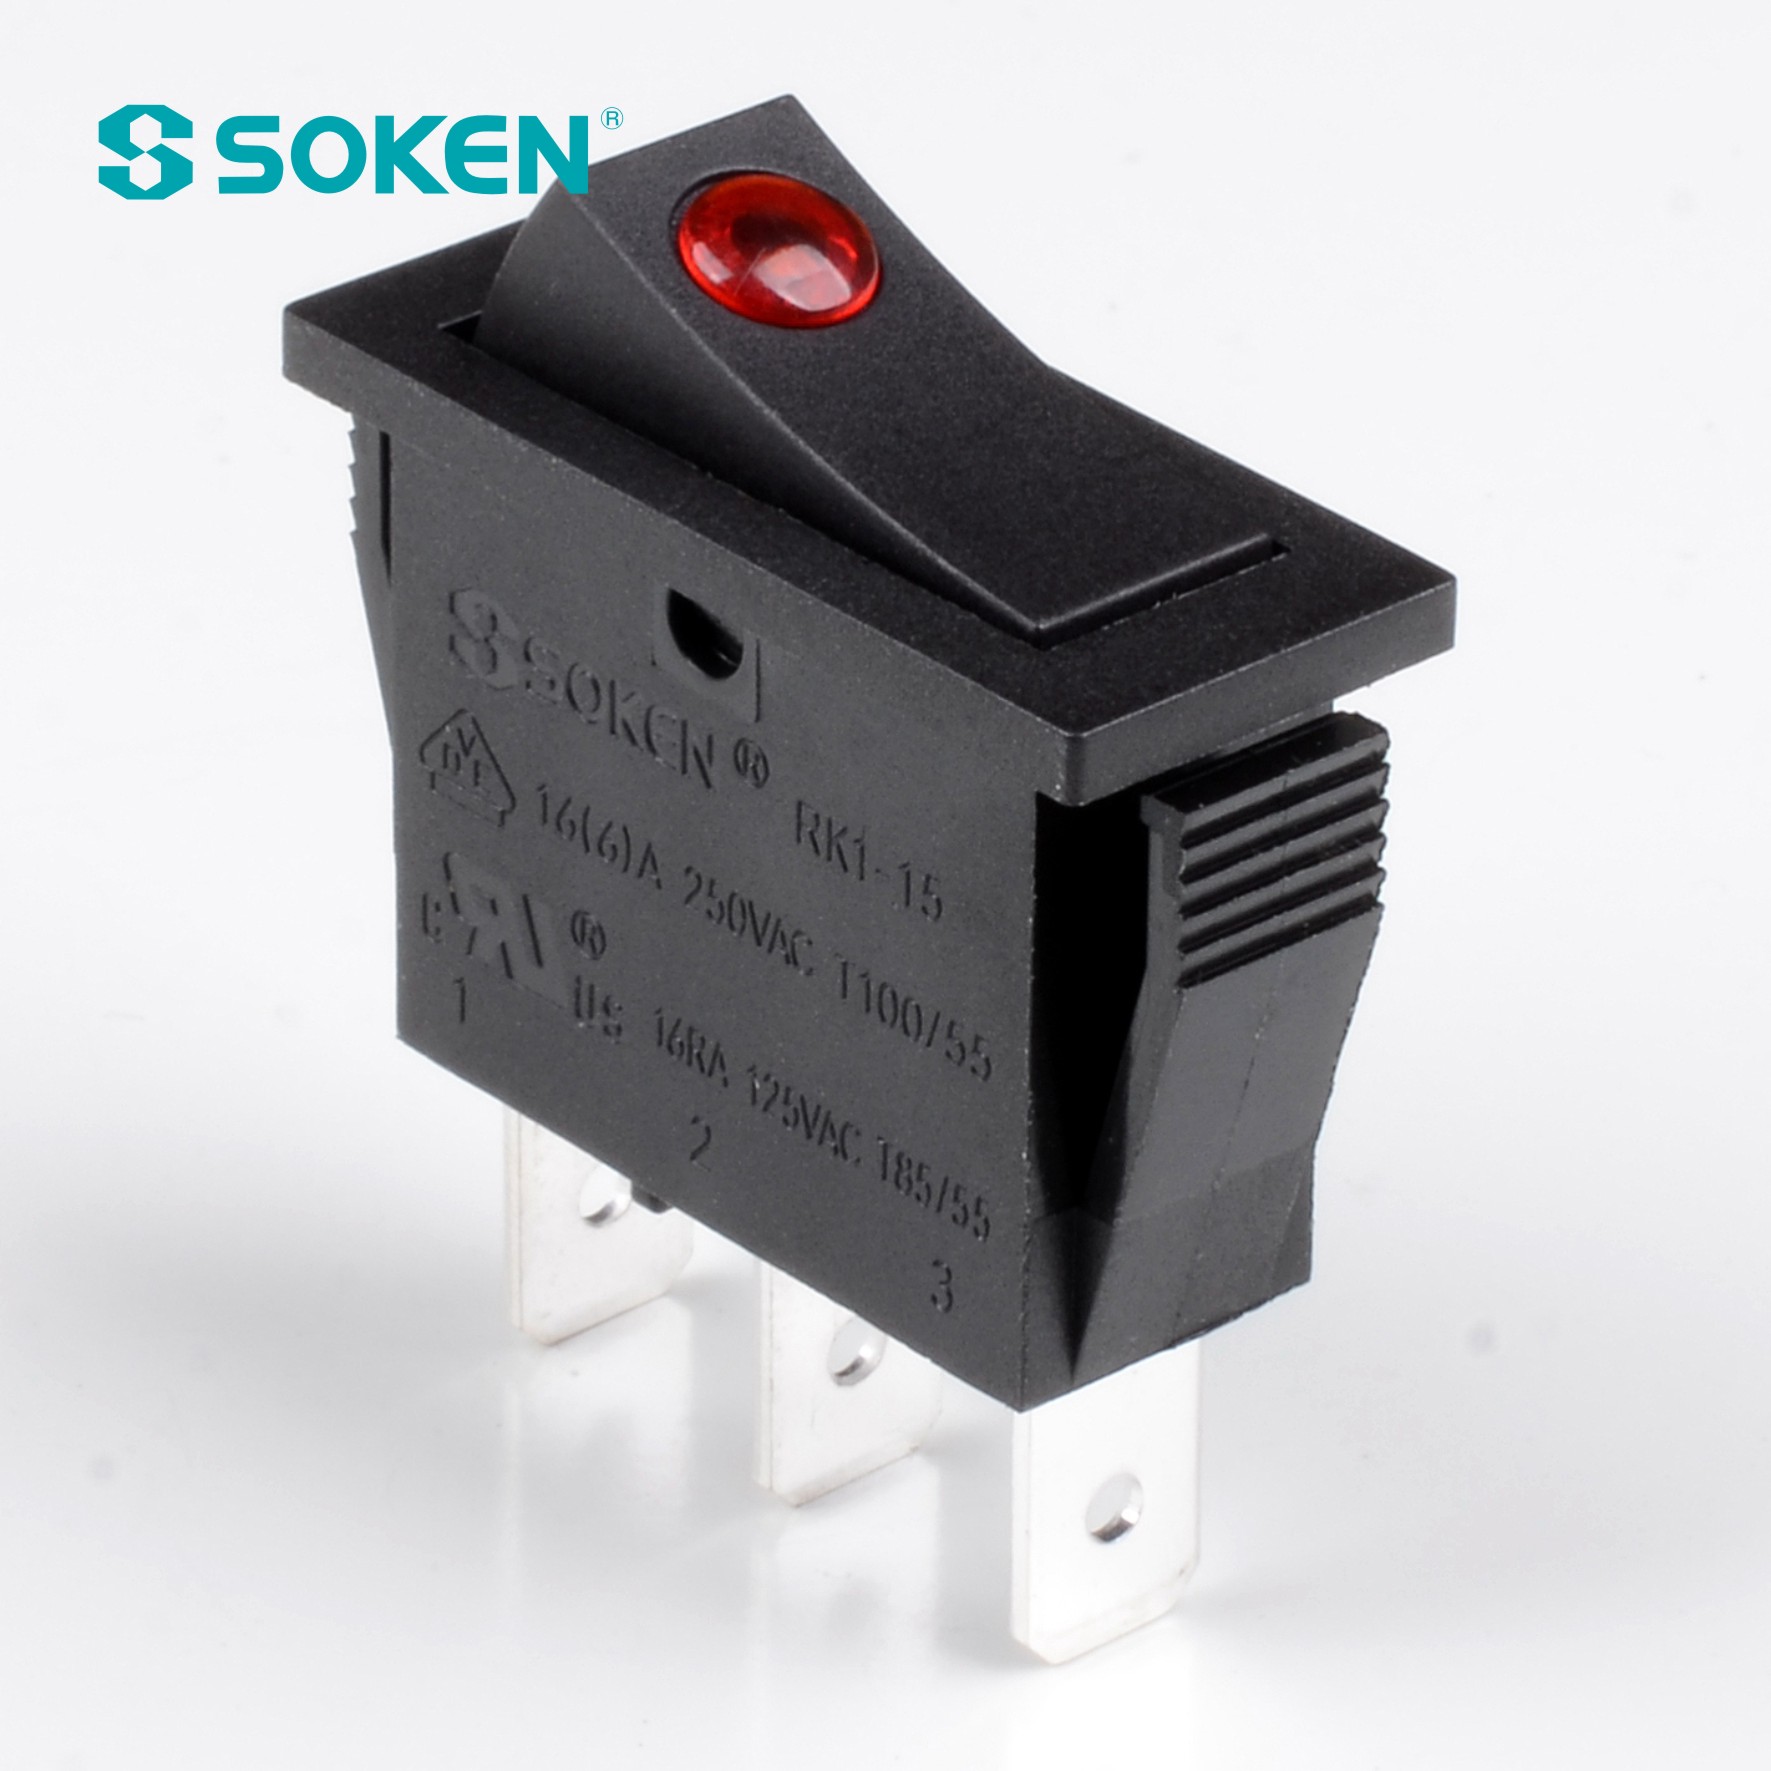 Soken Rk1-15 1X1n Lense ho tima Rocker Switch